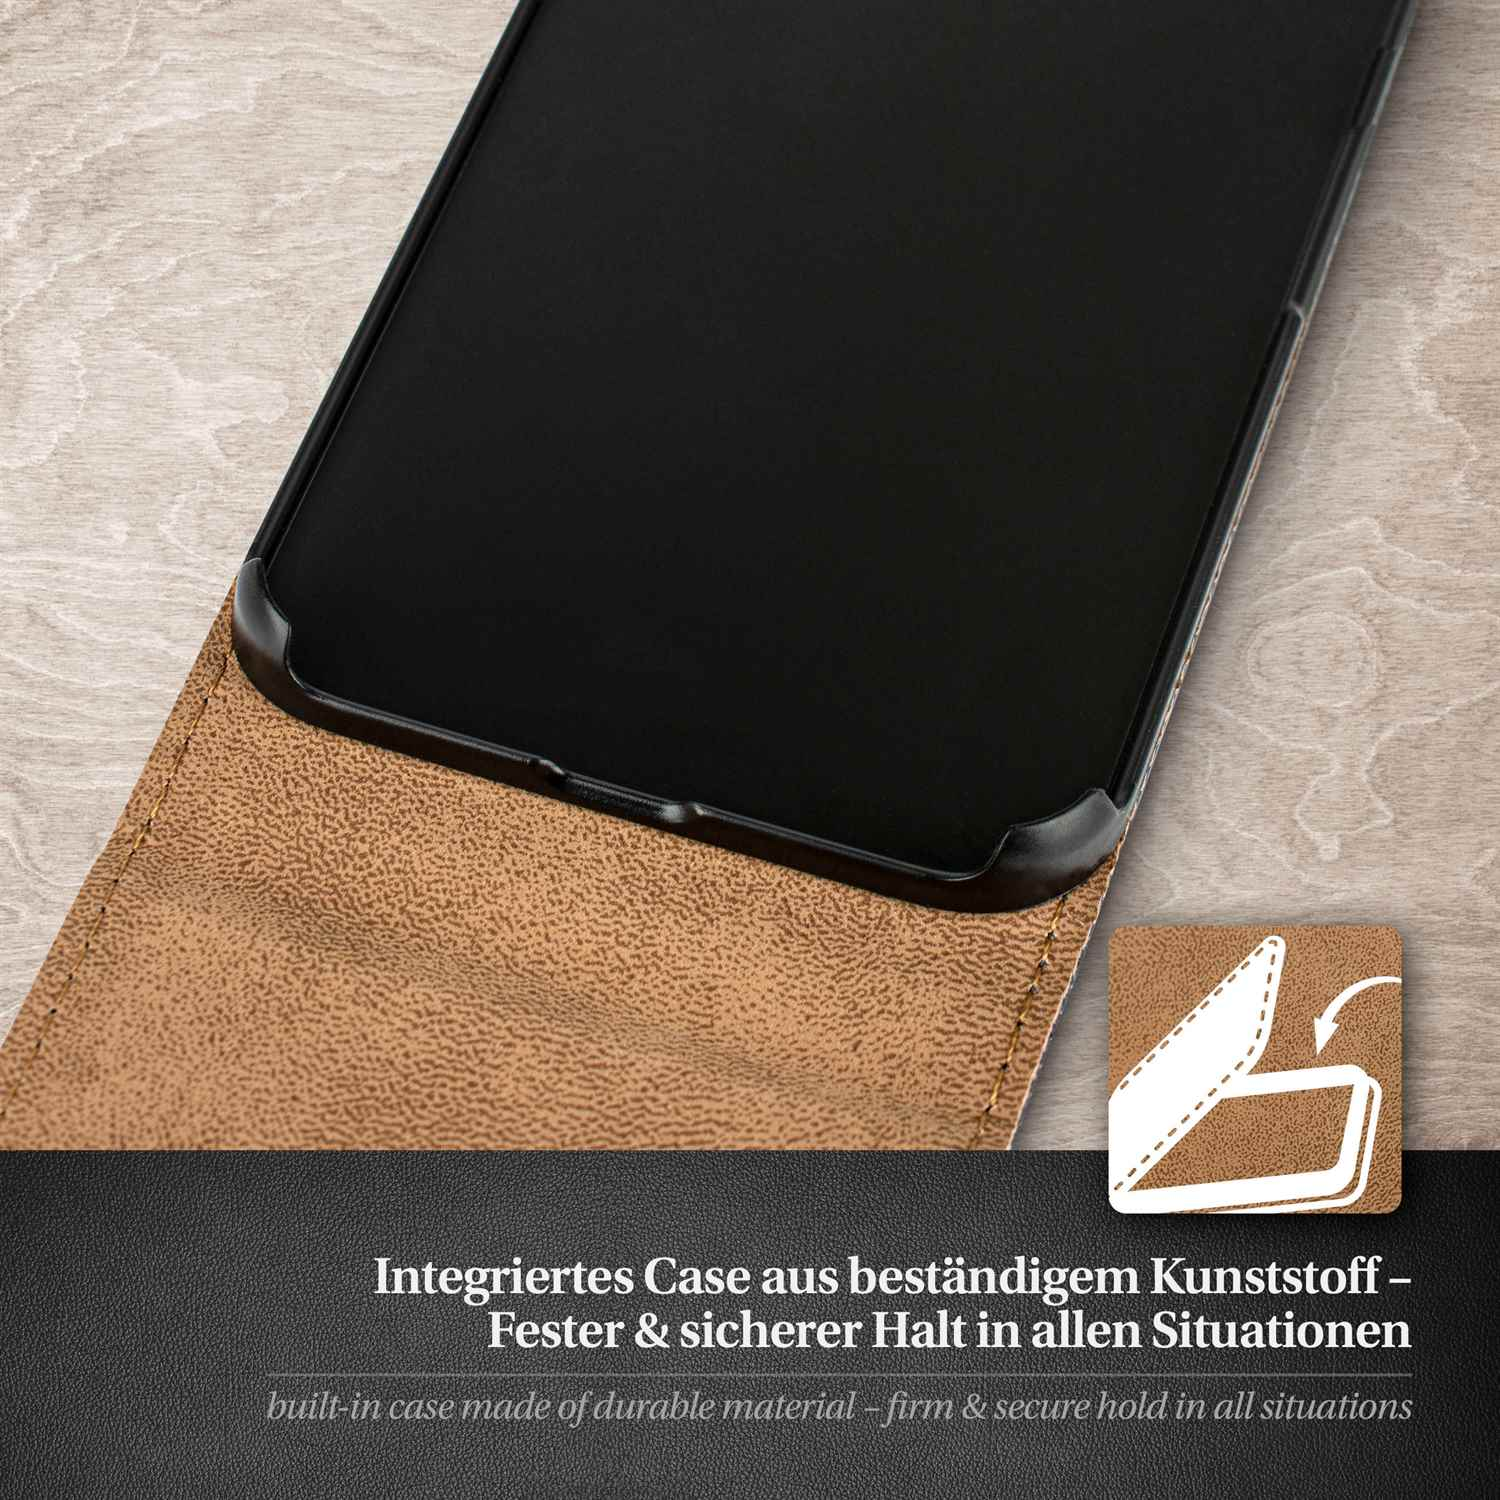 Huawei, Ascend Maroon-Red G510, Flip MOEX Flip Case, Cover,